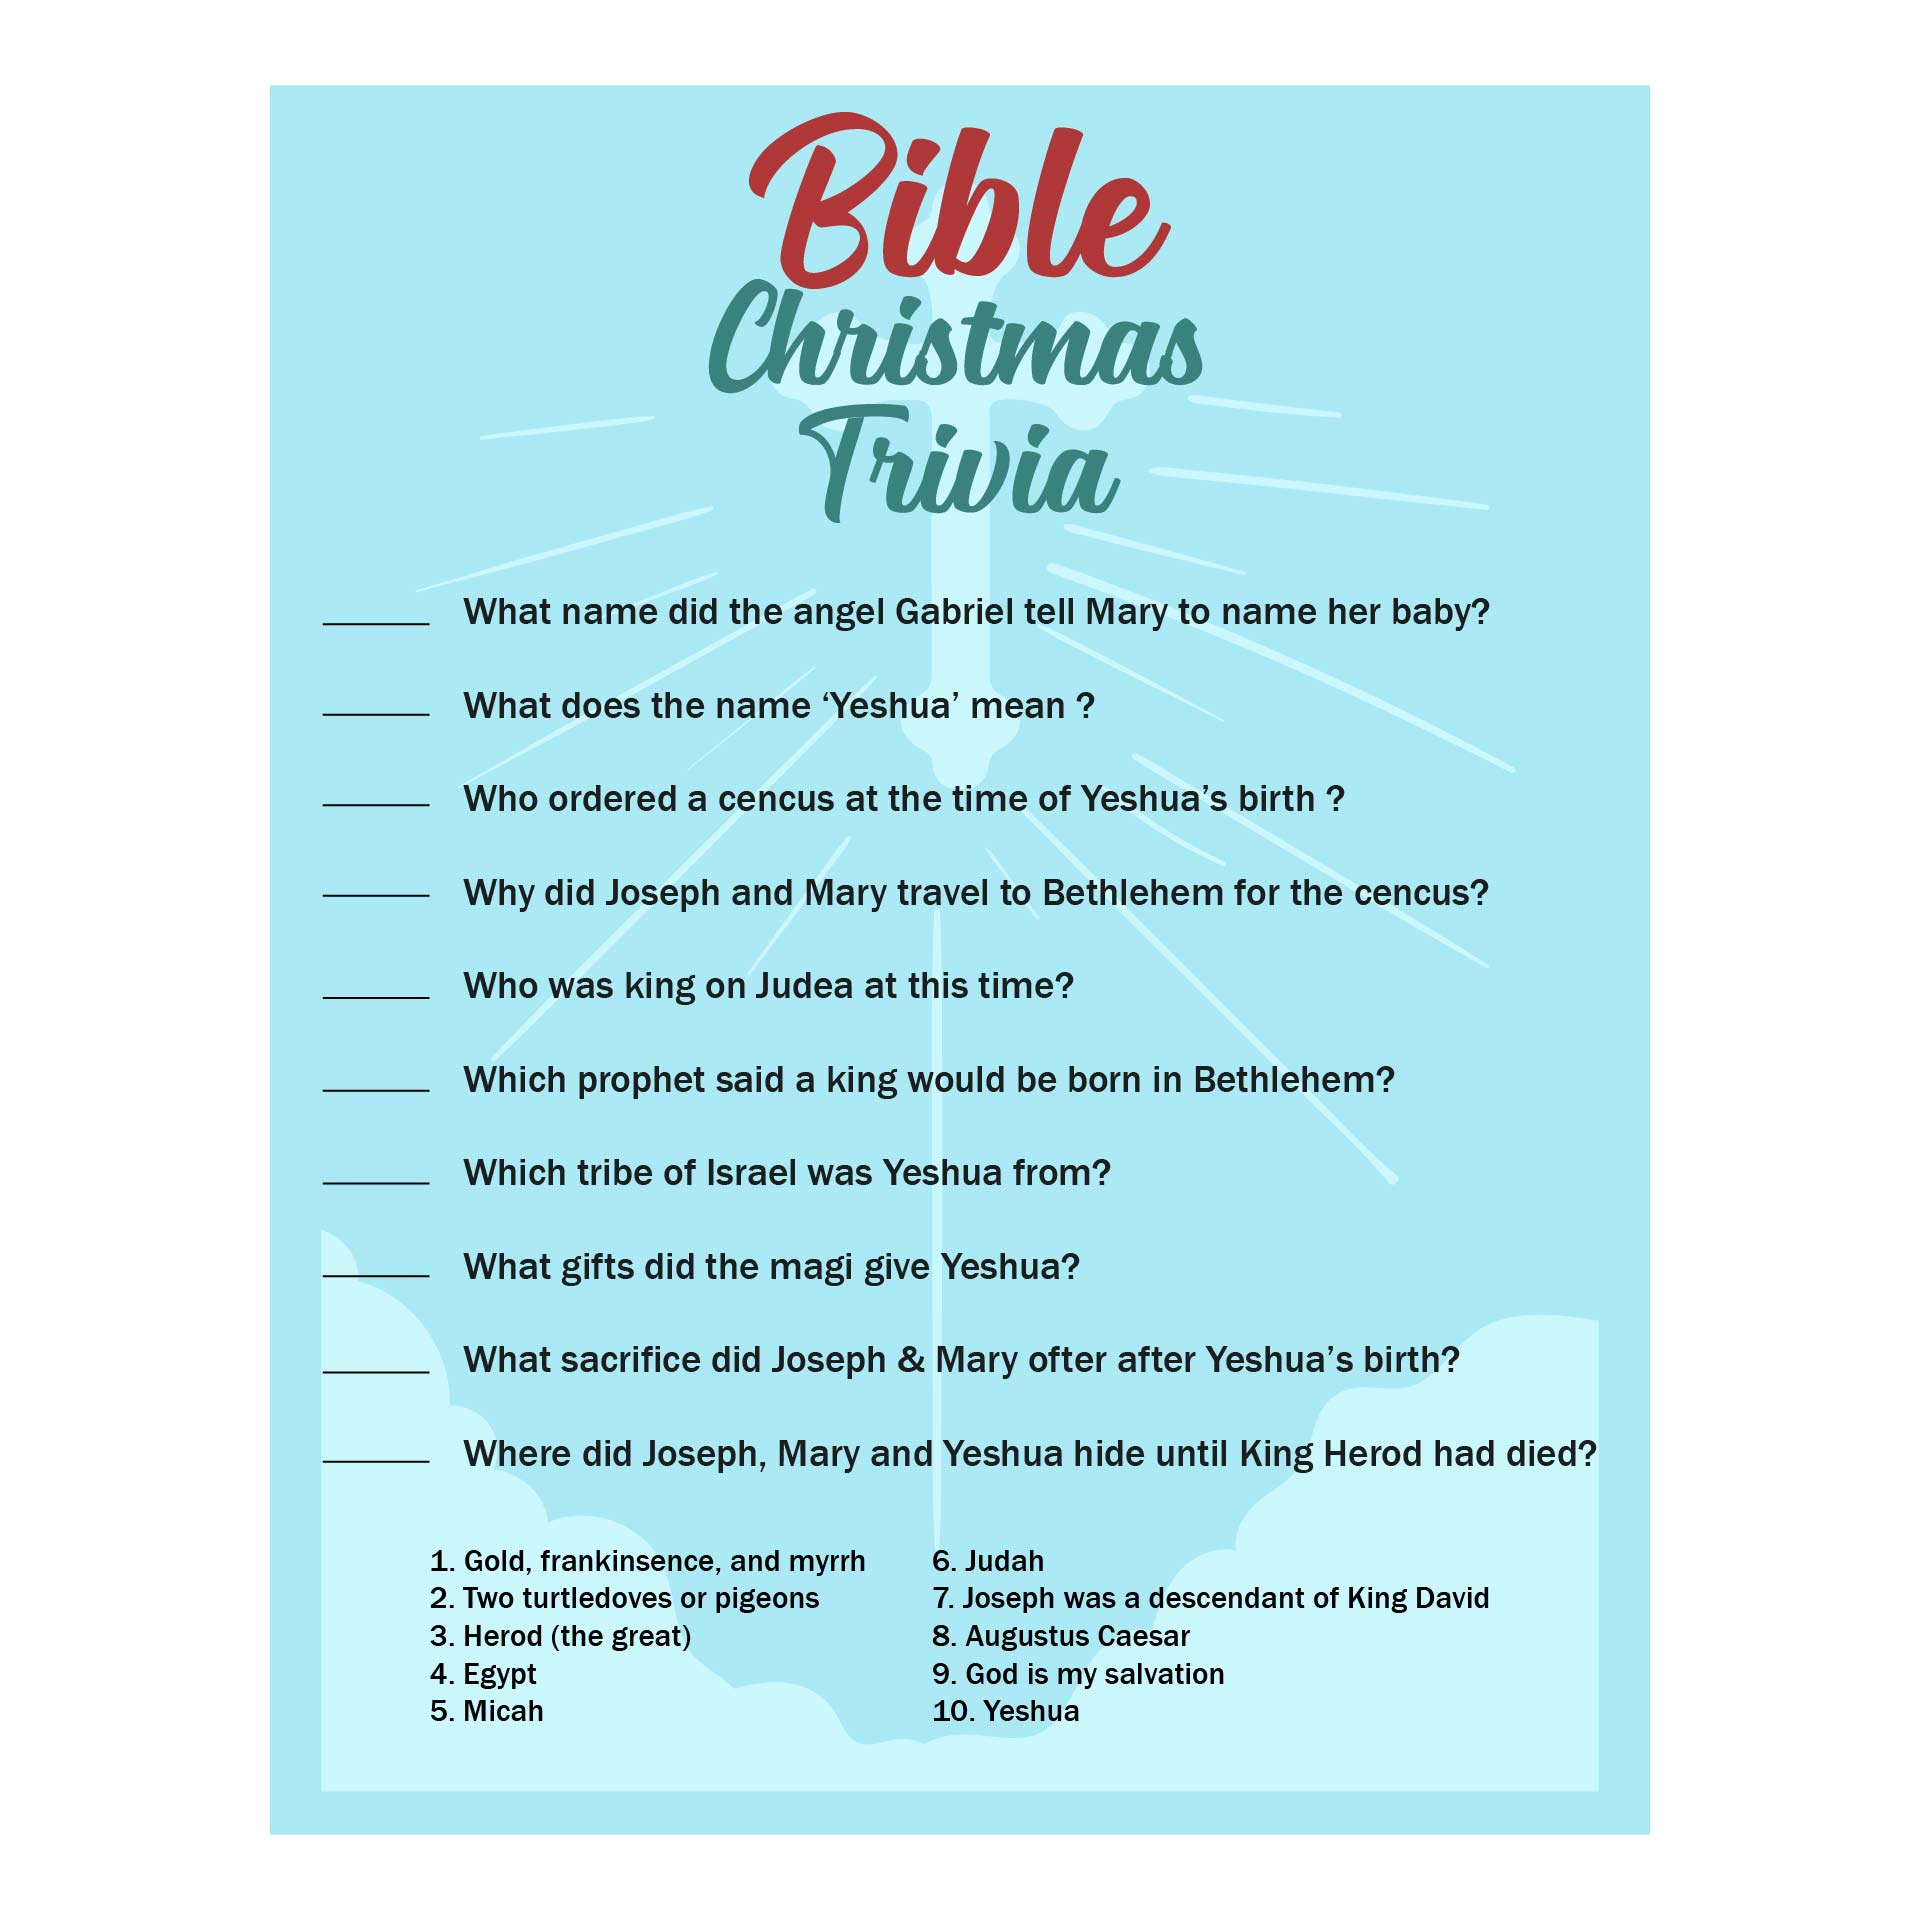 Bible Christmas Trivia Questions And Answers Printable